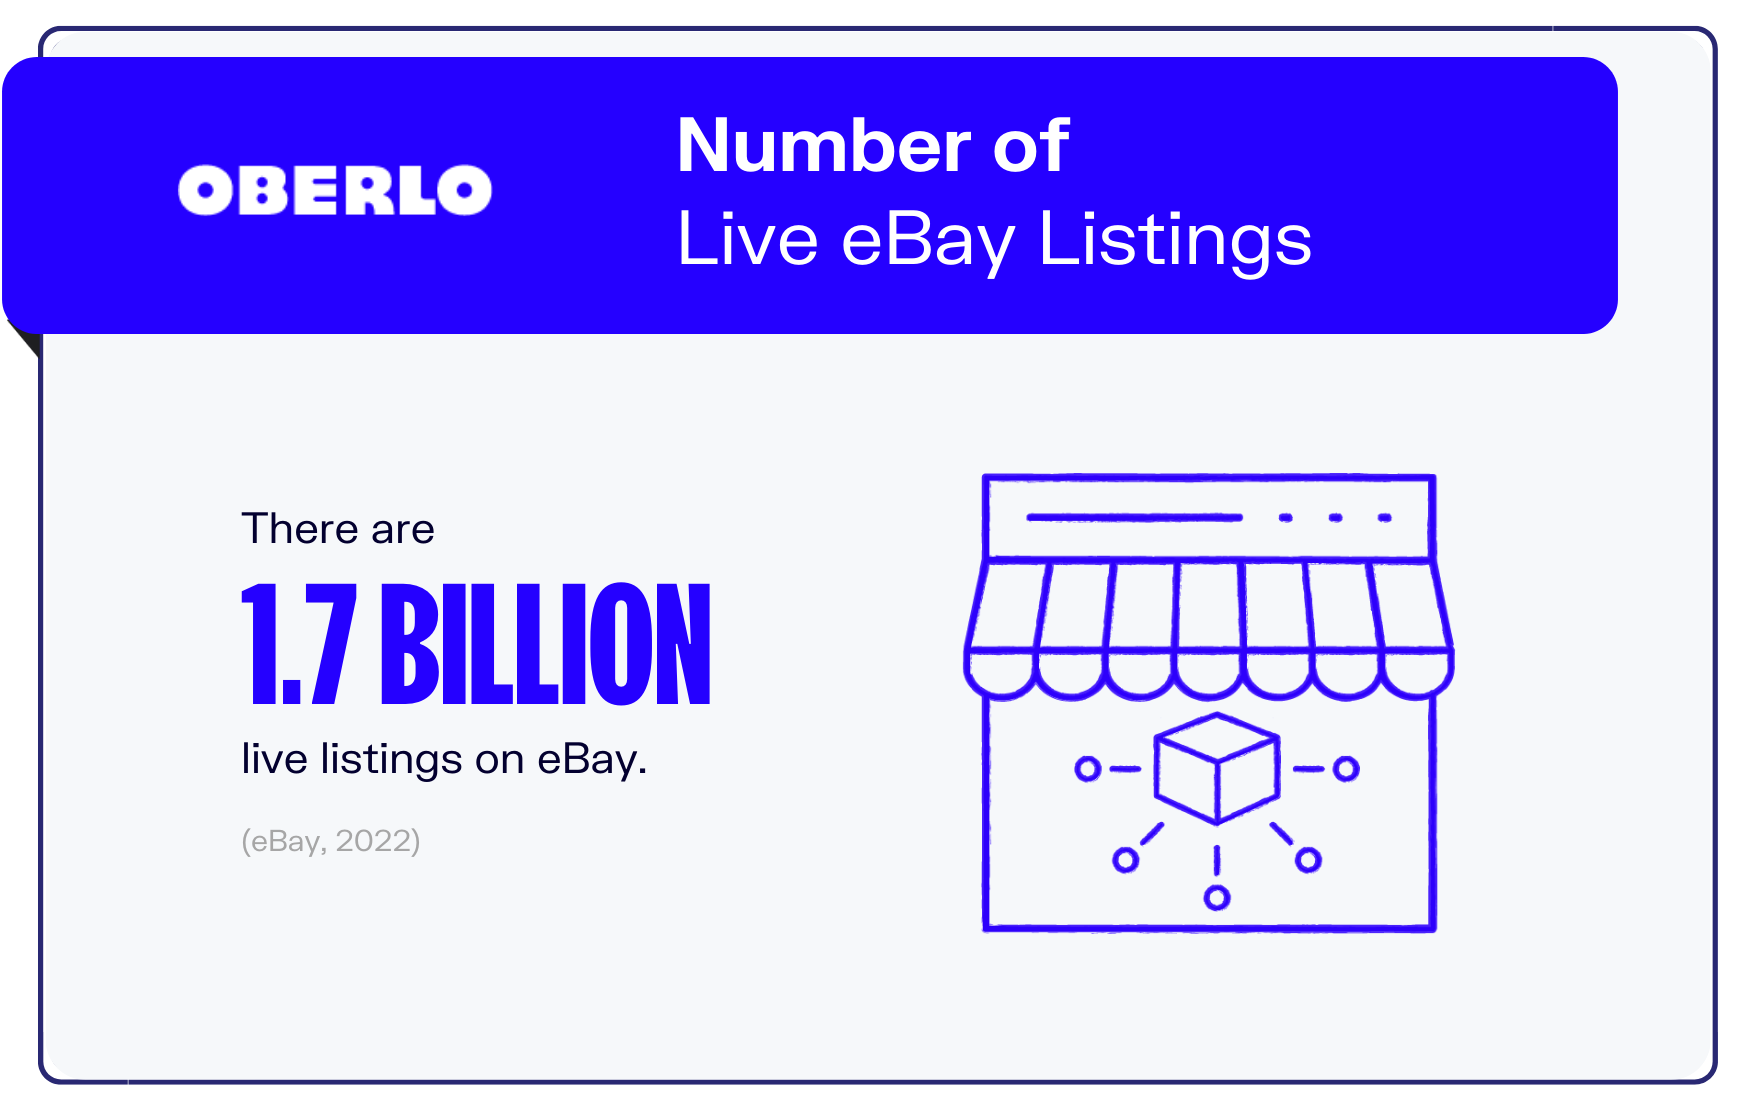 ebay statistics graphic4